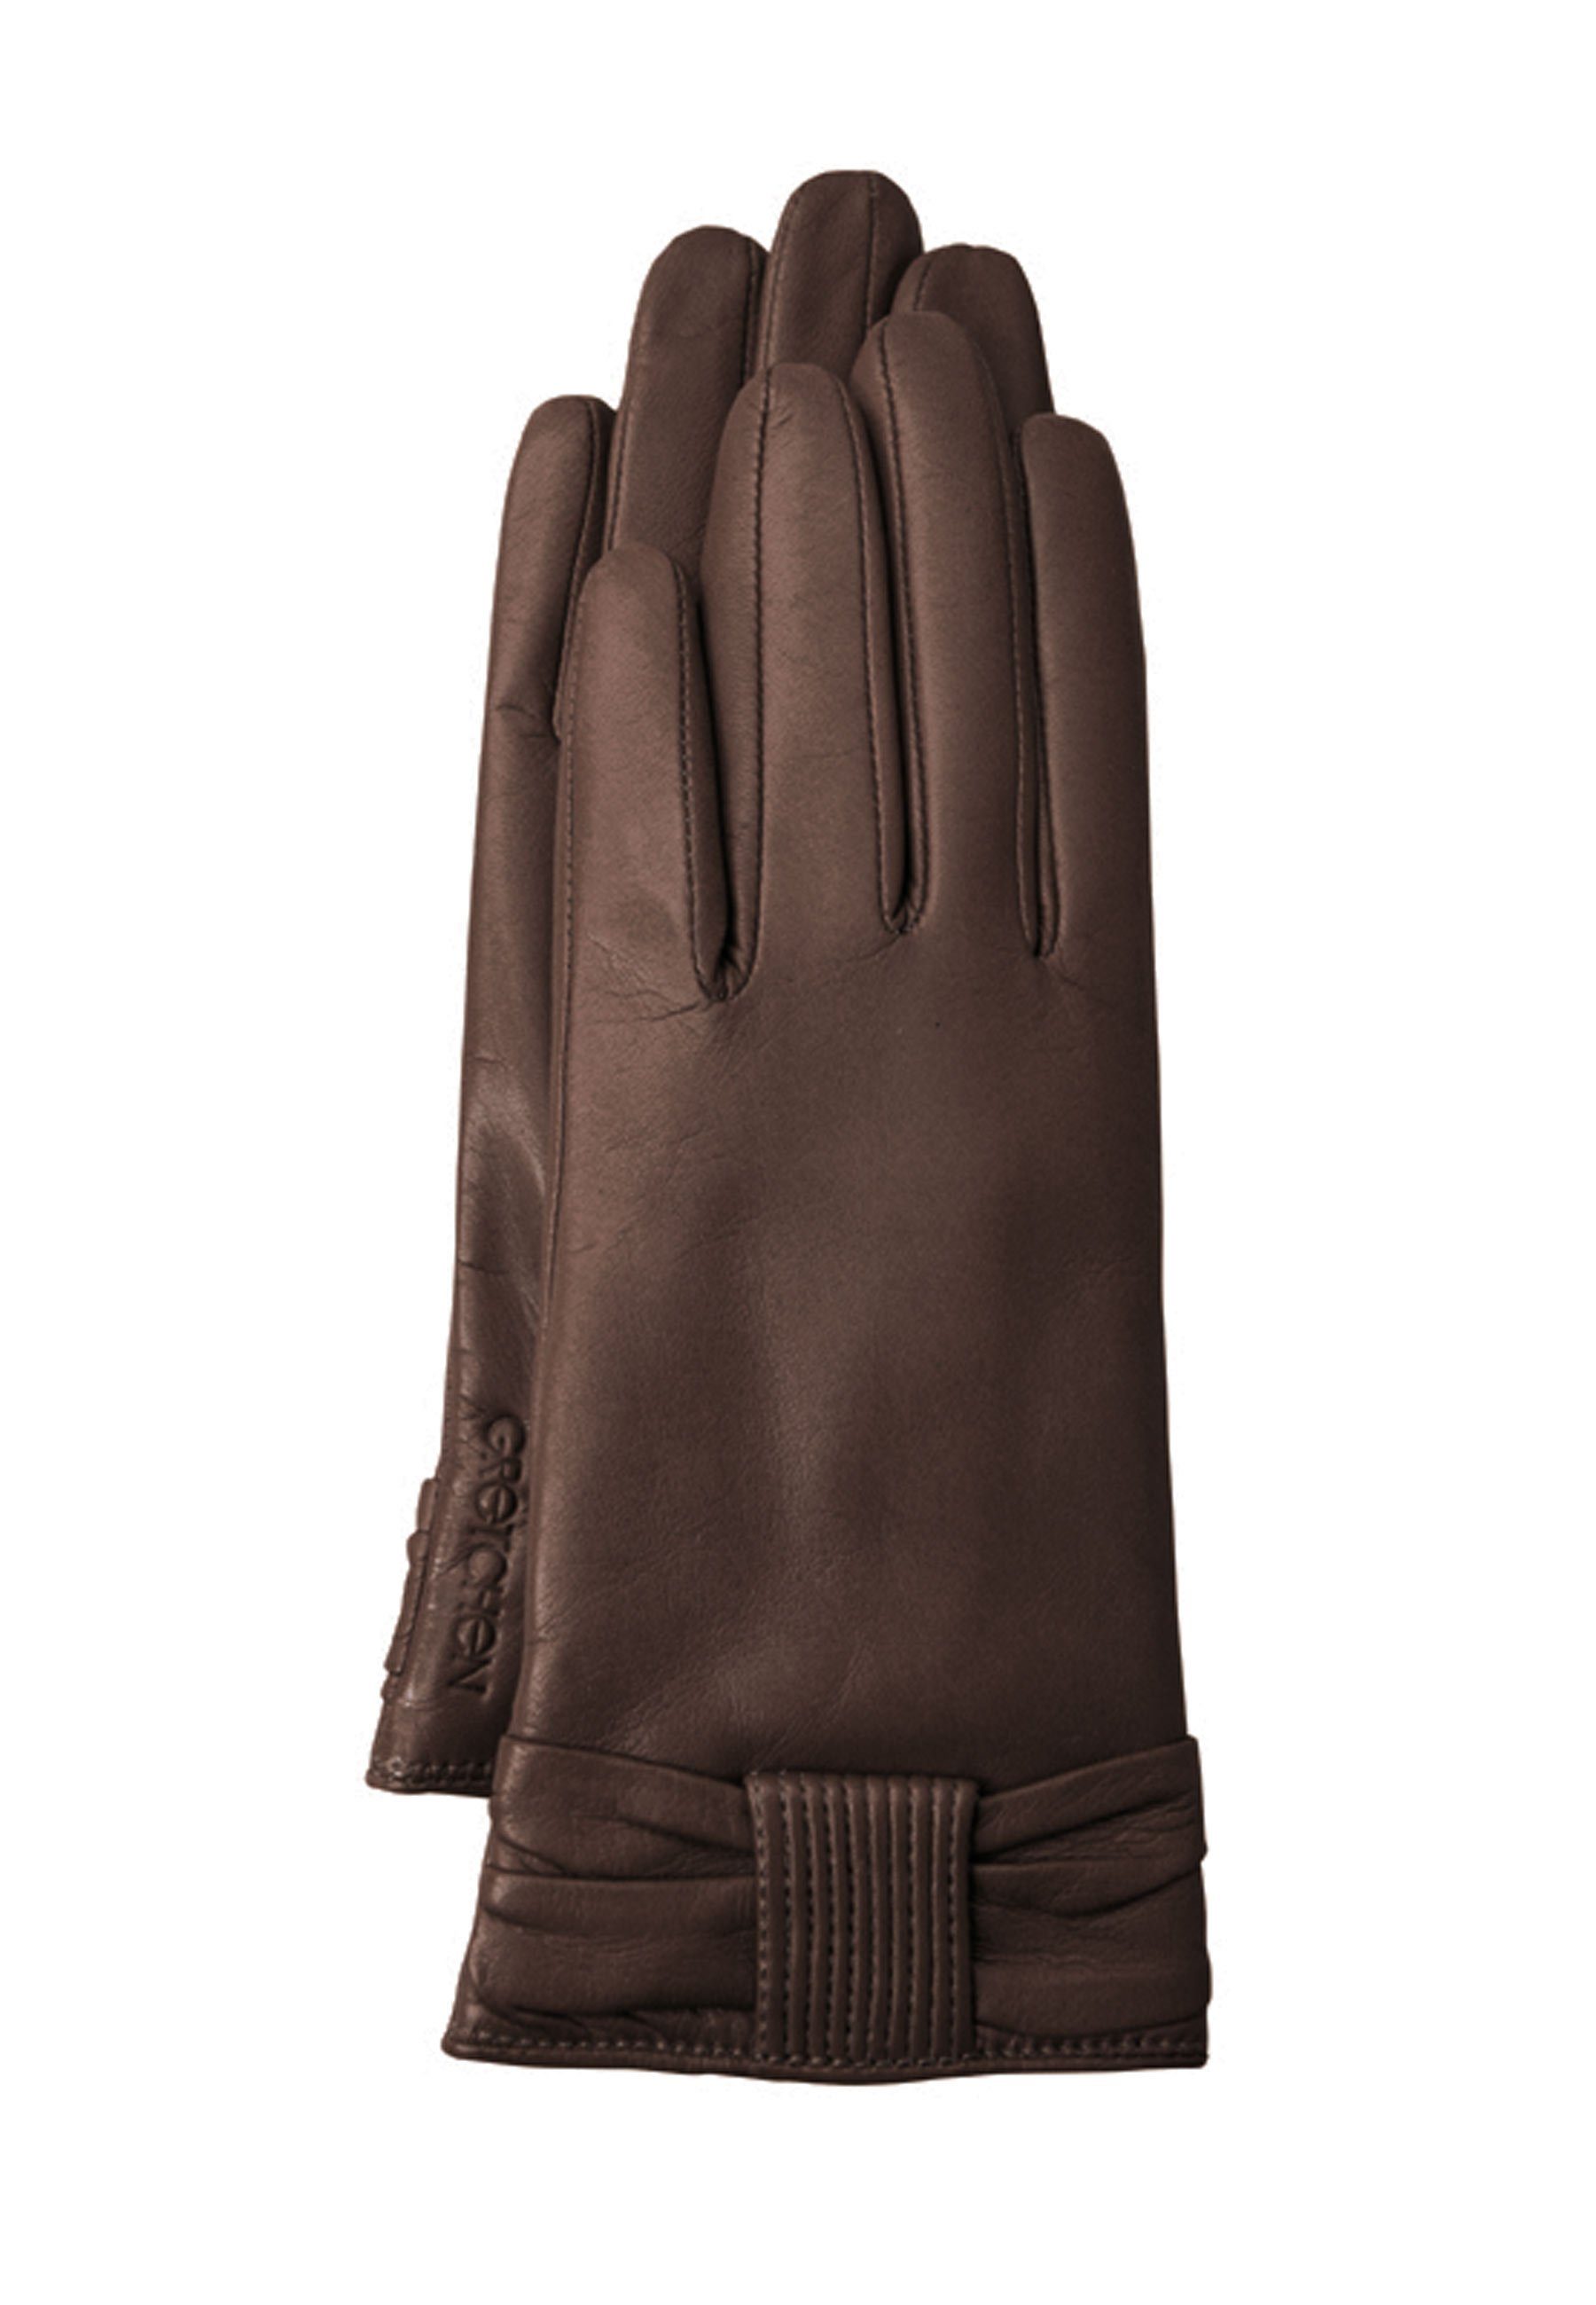 GRETCHEN Lederhandschuhe Gloves braun Bow mit kuscheligem Kaschmir-Futter